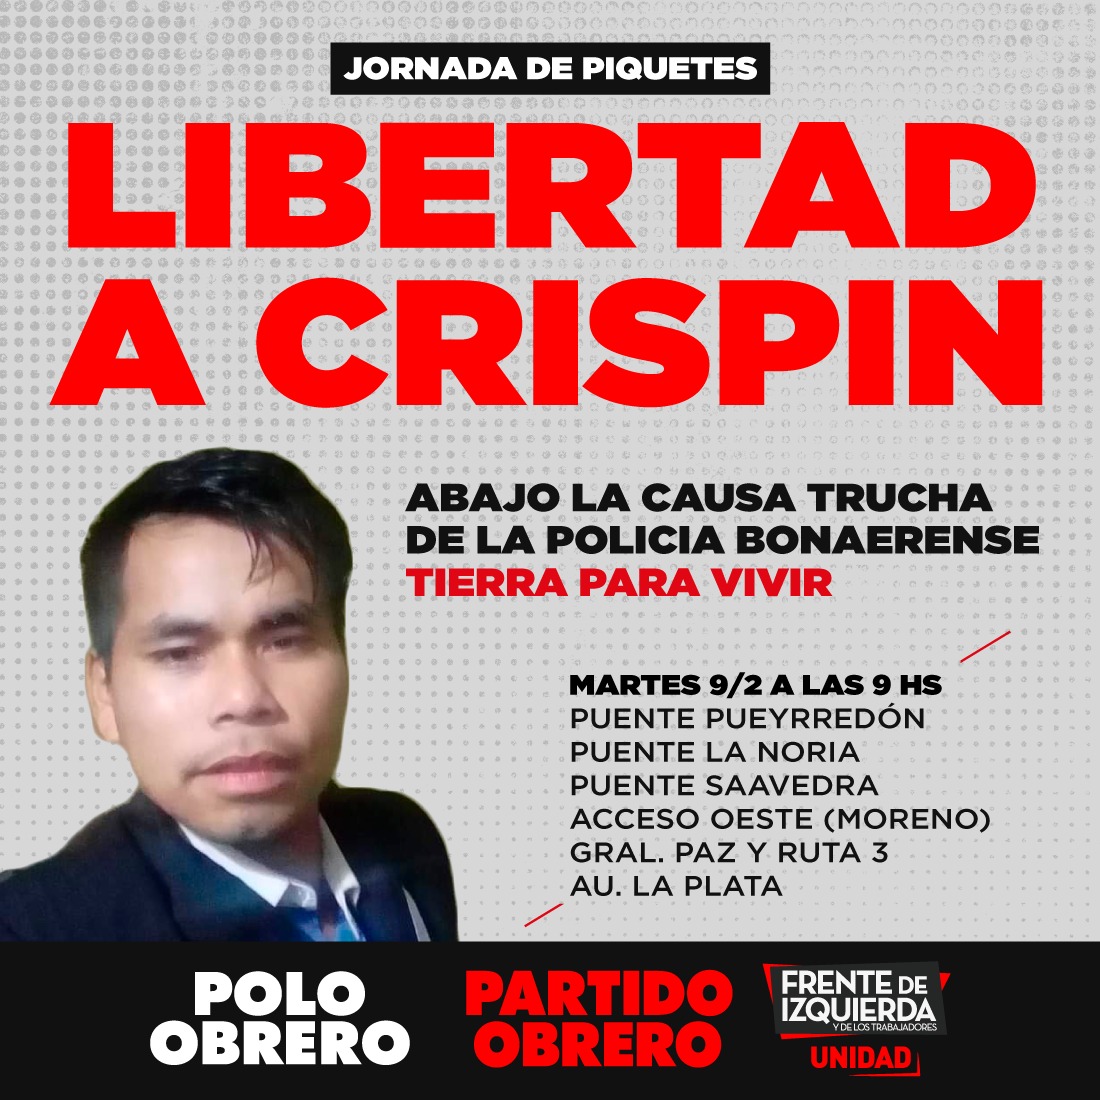 Libertad a Rafael Crispin: martes 9h, cortes en los accesos